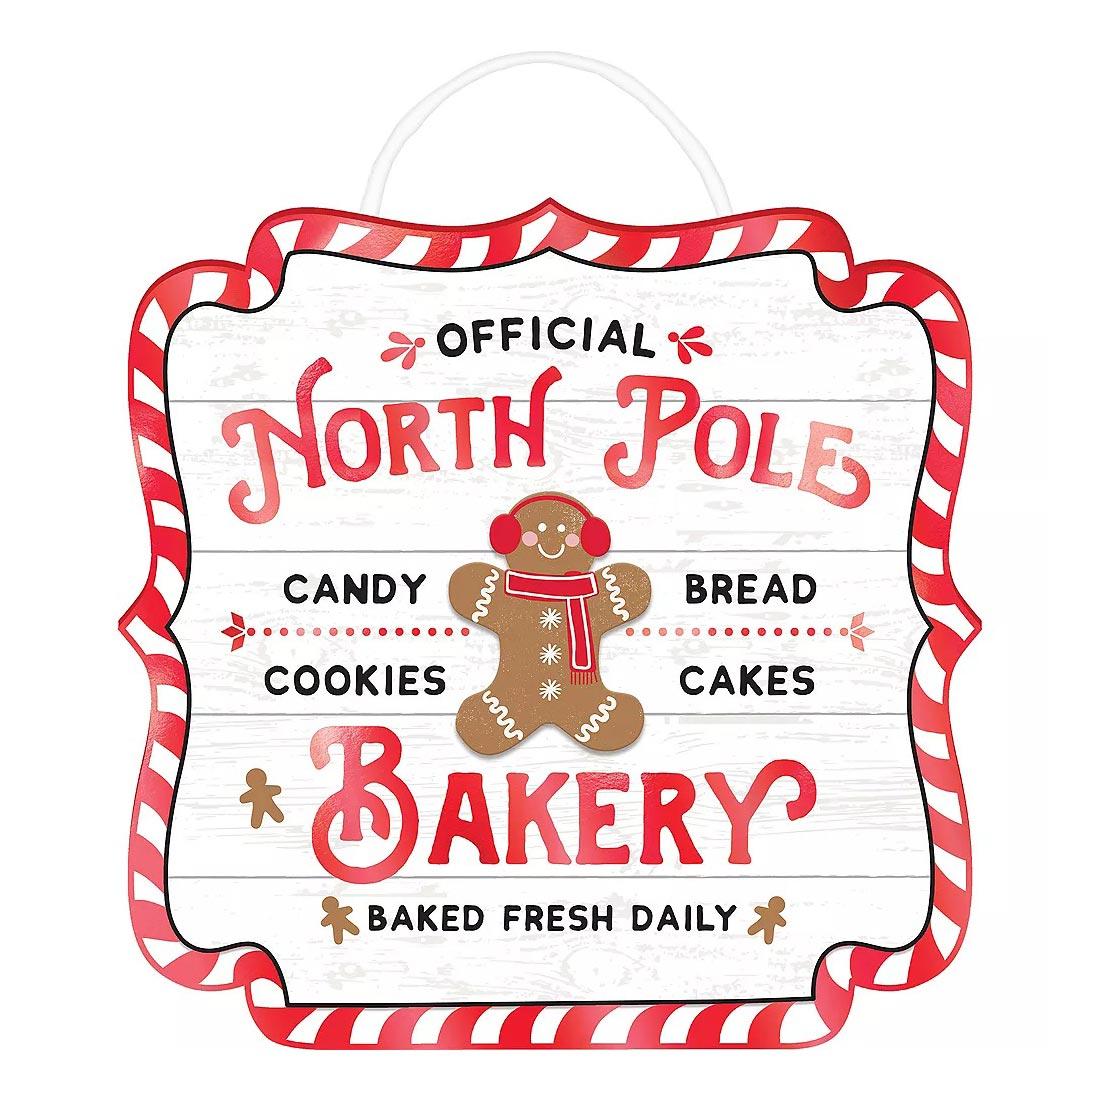 North Pole Bake Shop Team Sign Decoration Decorations - Party Centre